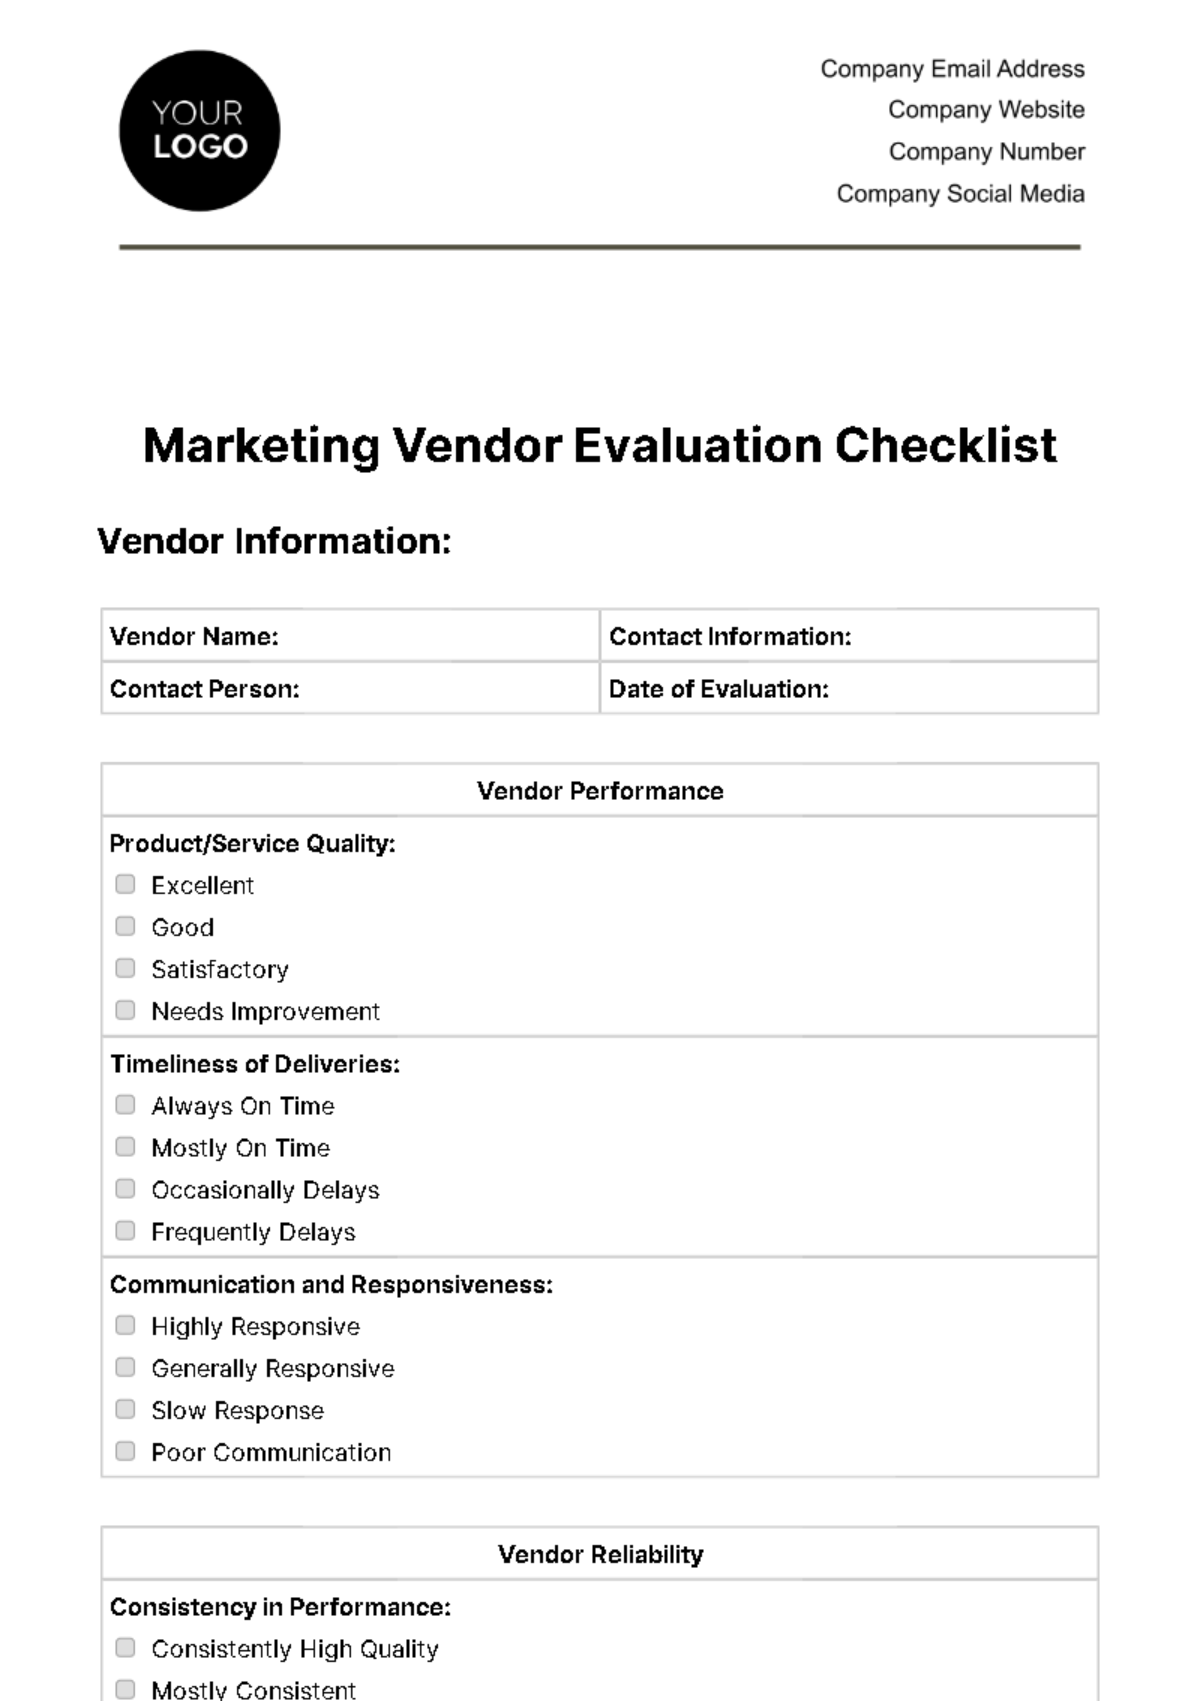 Free Marketing Vendor Evaluation Checklist Template